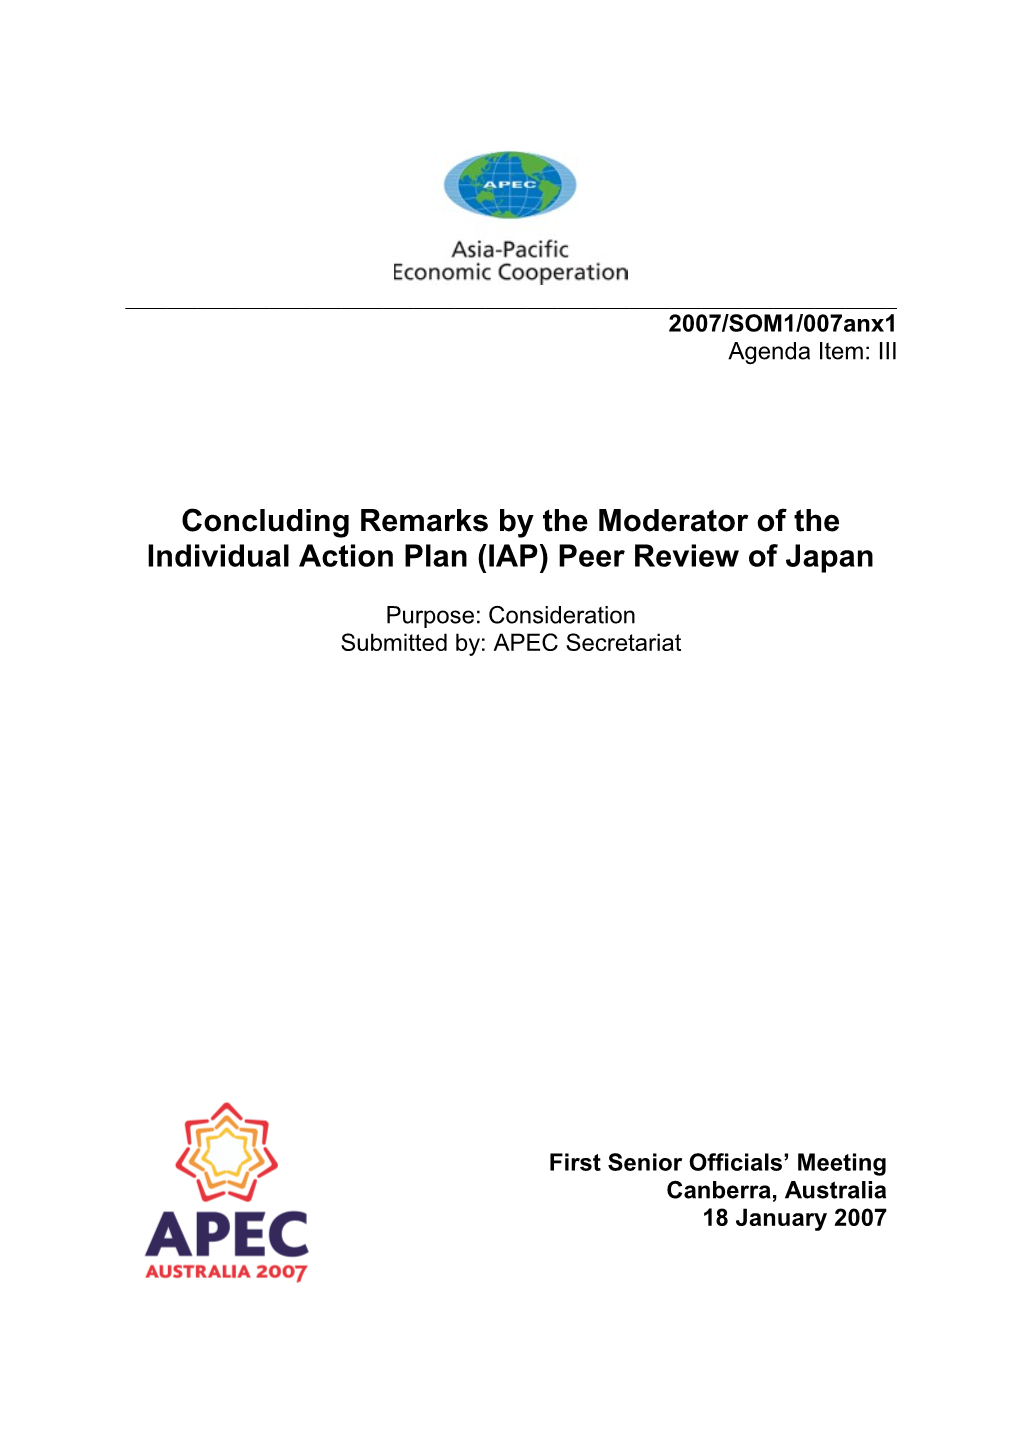 Iap Peer Review of Japan